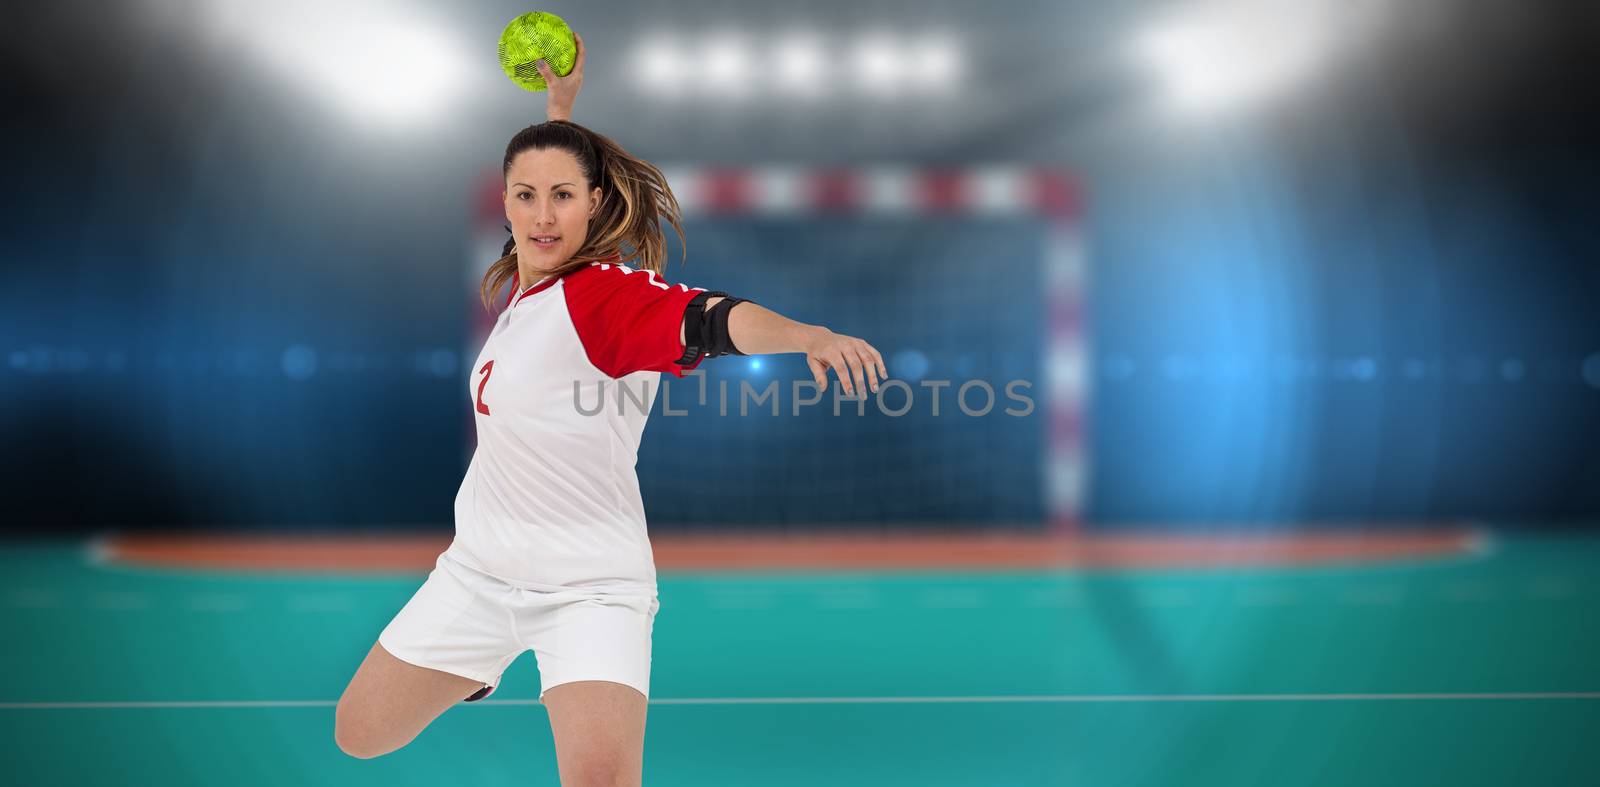 Sportswoman throwing a ball  by Wavebreakmedia